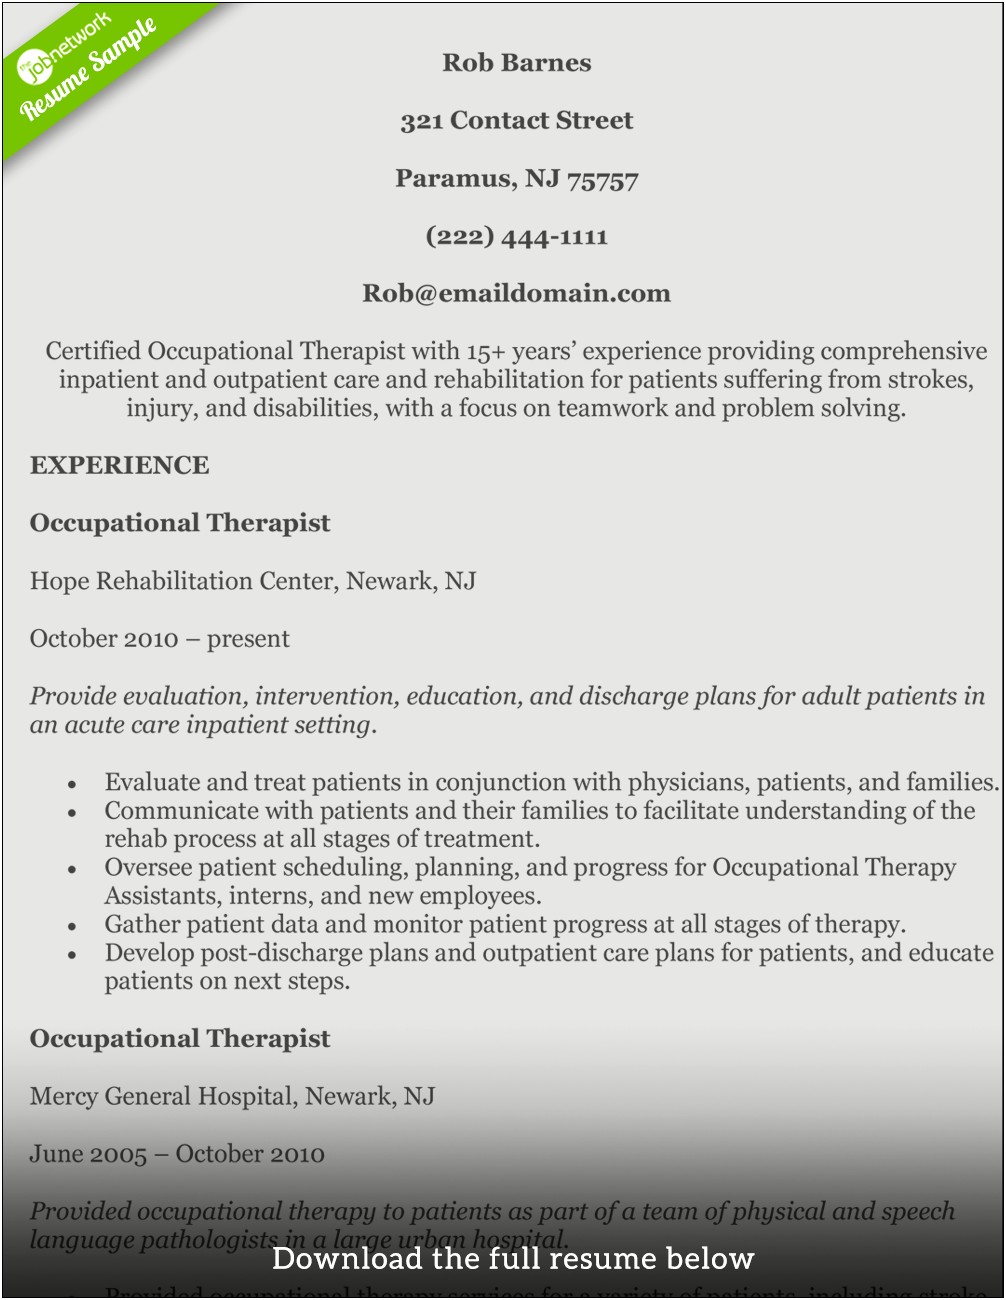 Occupational Therapist Sample Resume Fieldwork